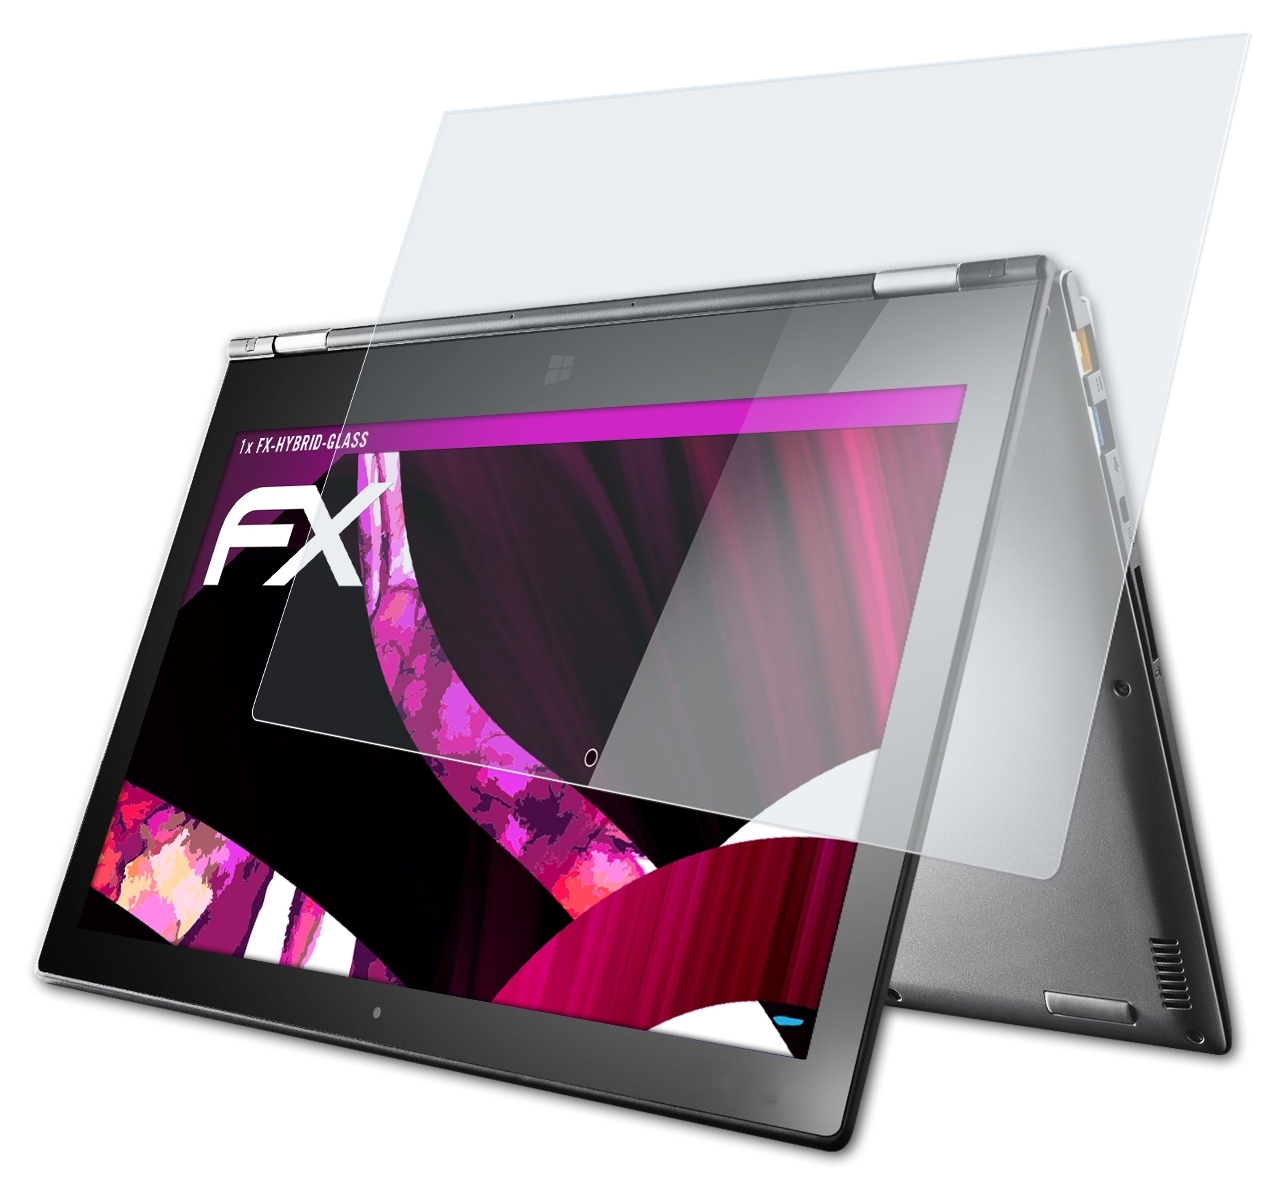 ATFOLIX (13.3 IdeaPad Yoga inch)) FX-Hybrid-Glass Schutzglas(für 2 Lenovo Pro